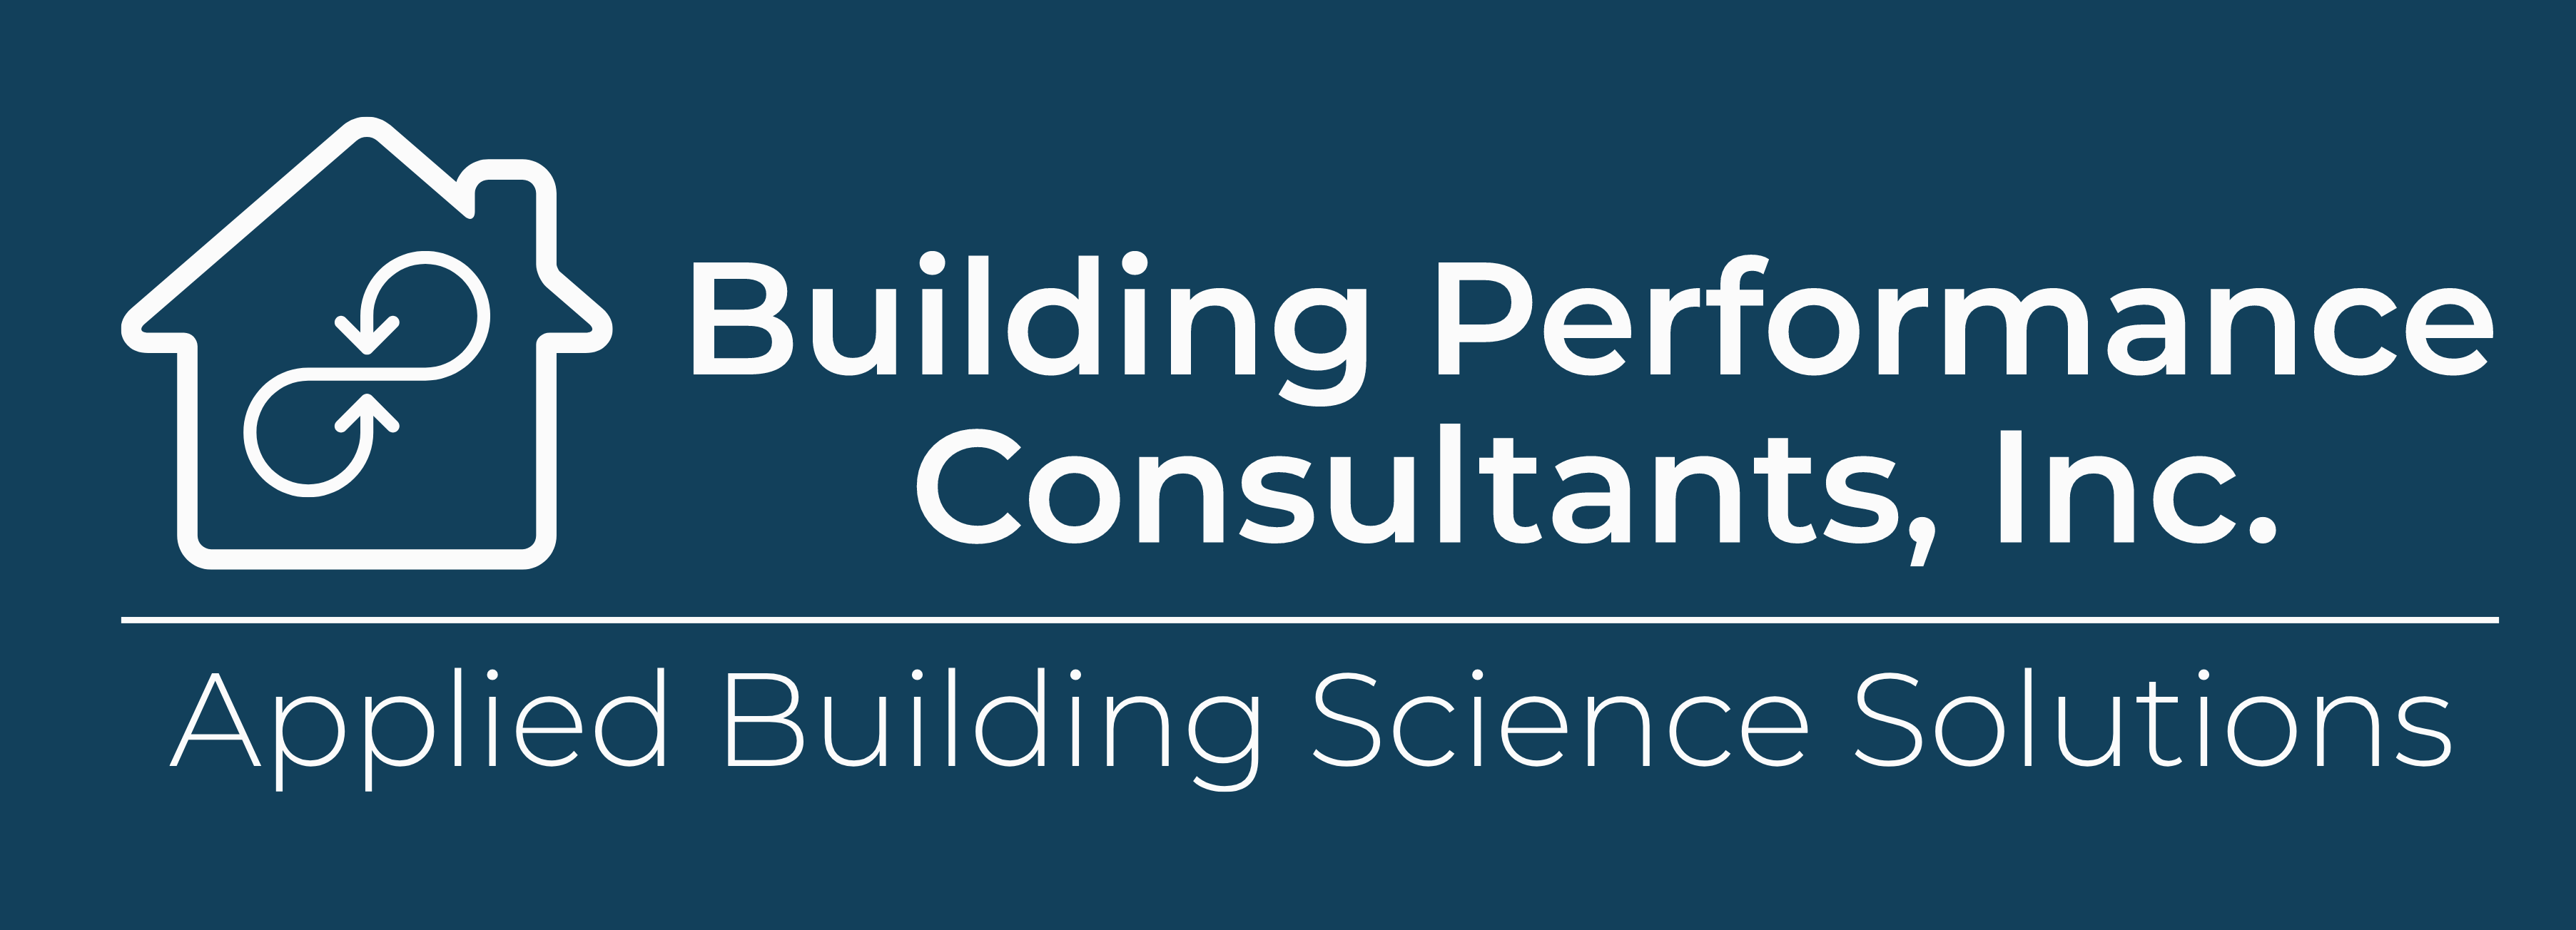 Building Performance Consultants, Inc. company logo